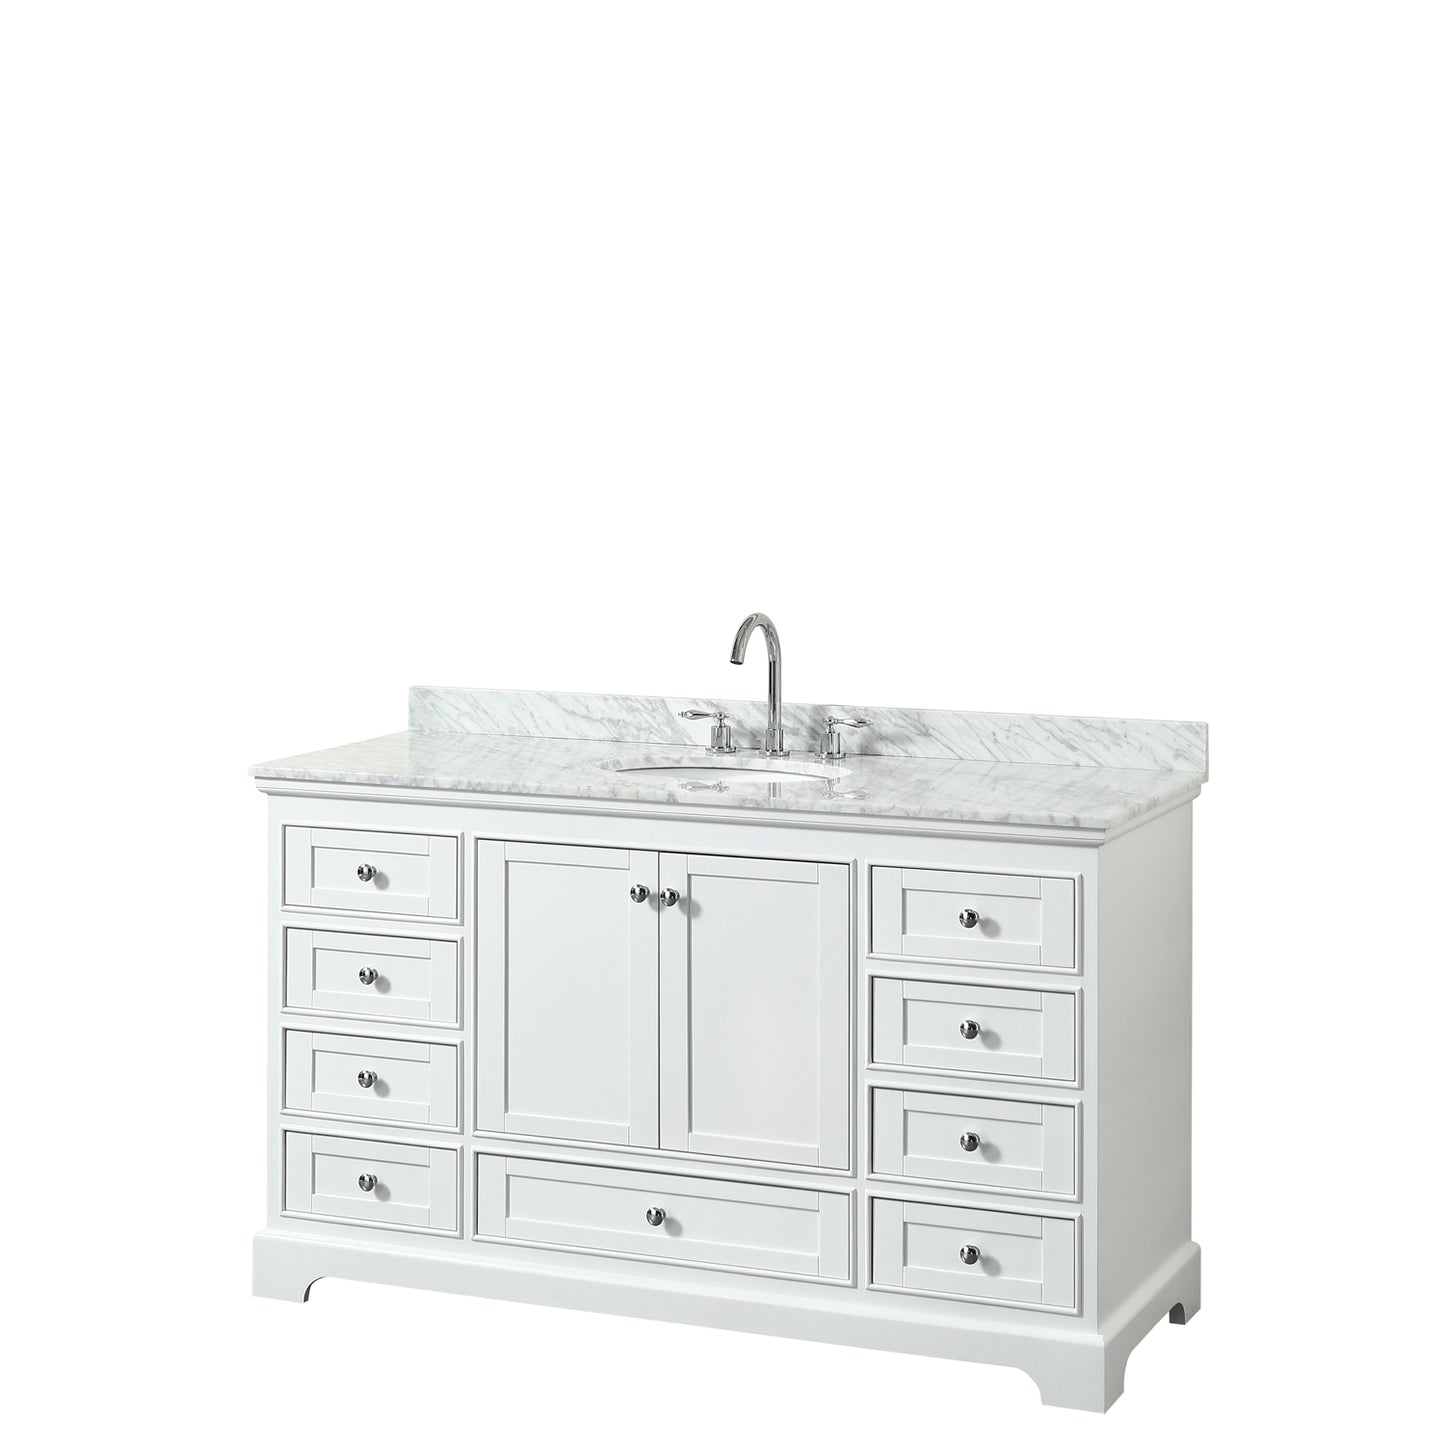 60 Inch Single Bathroom Vanity, White Carrara Marble Countertop, Undermount Oval Sink, and No Mirror - Luxe Bathroom Vanities Luxury Bathroom Fixtures Bathroom Furniture